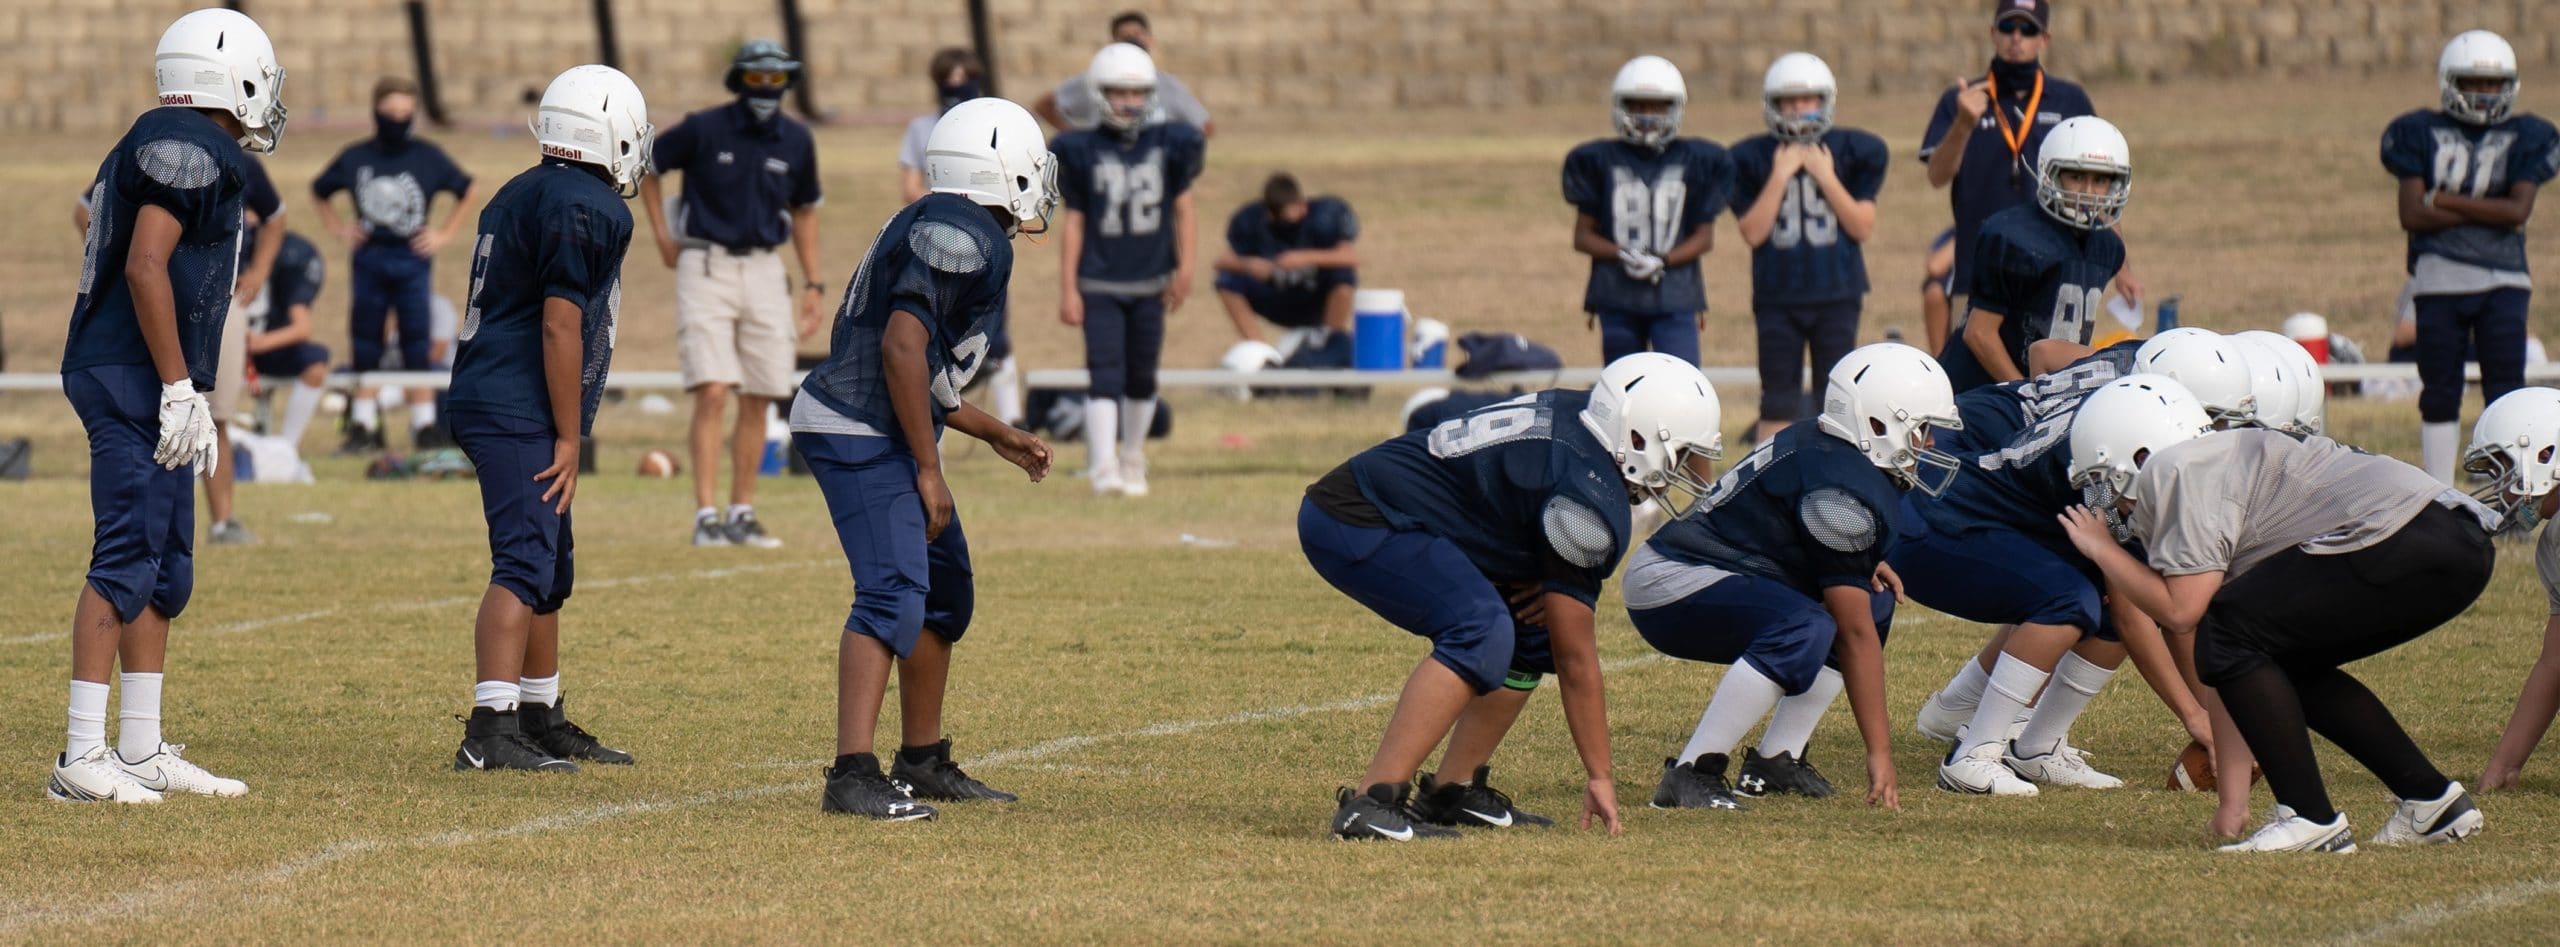 Jefferson Middle School Football Team | San Antonio Sports Photography